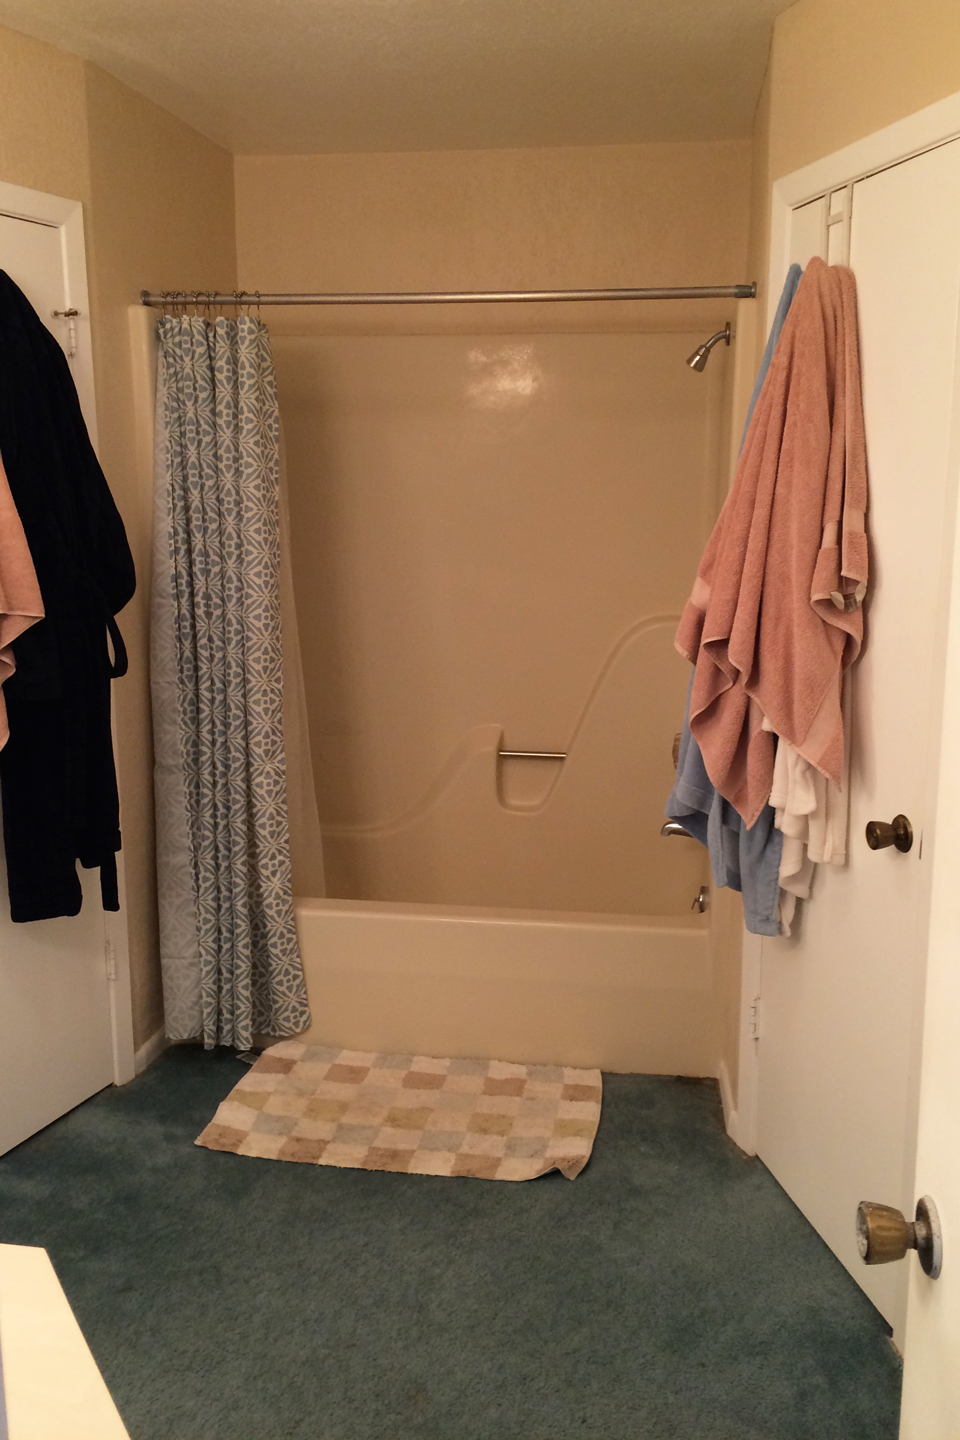 A dark teal carpeted bathroom with beige walls